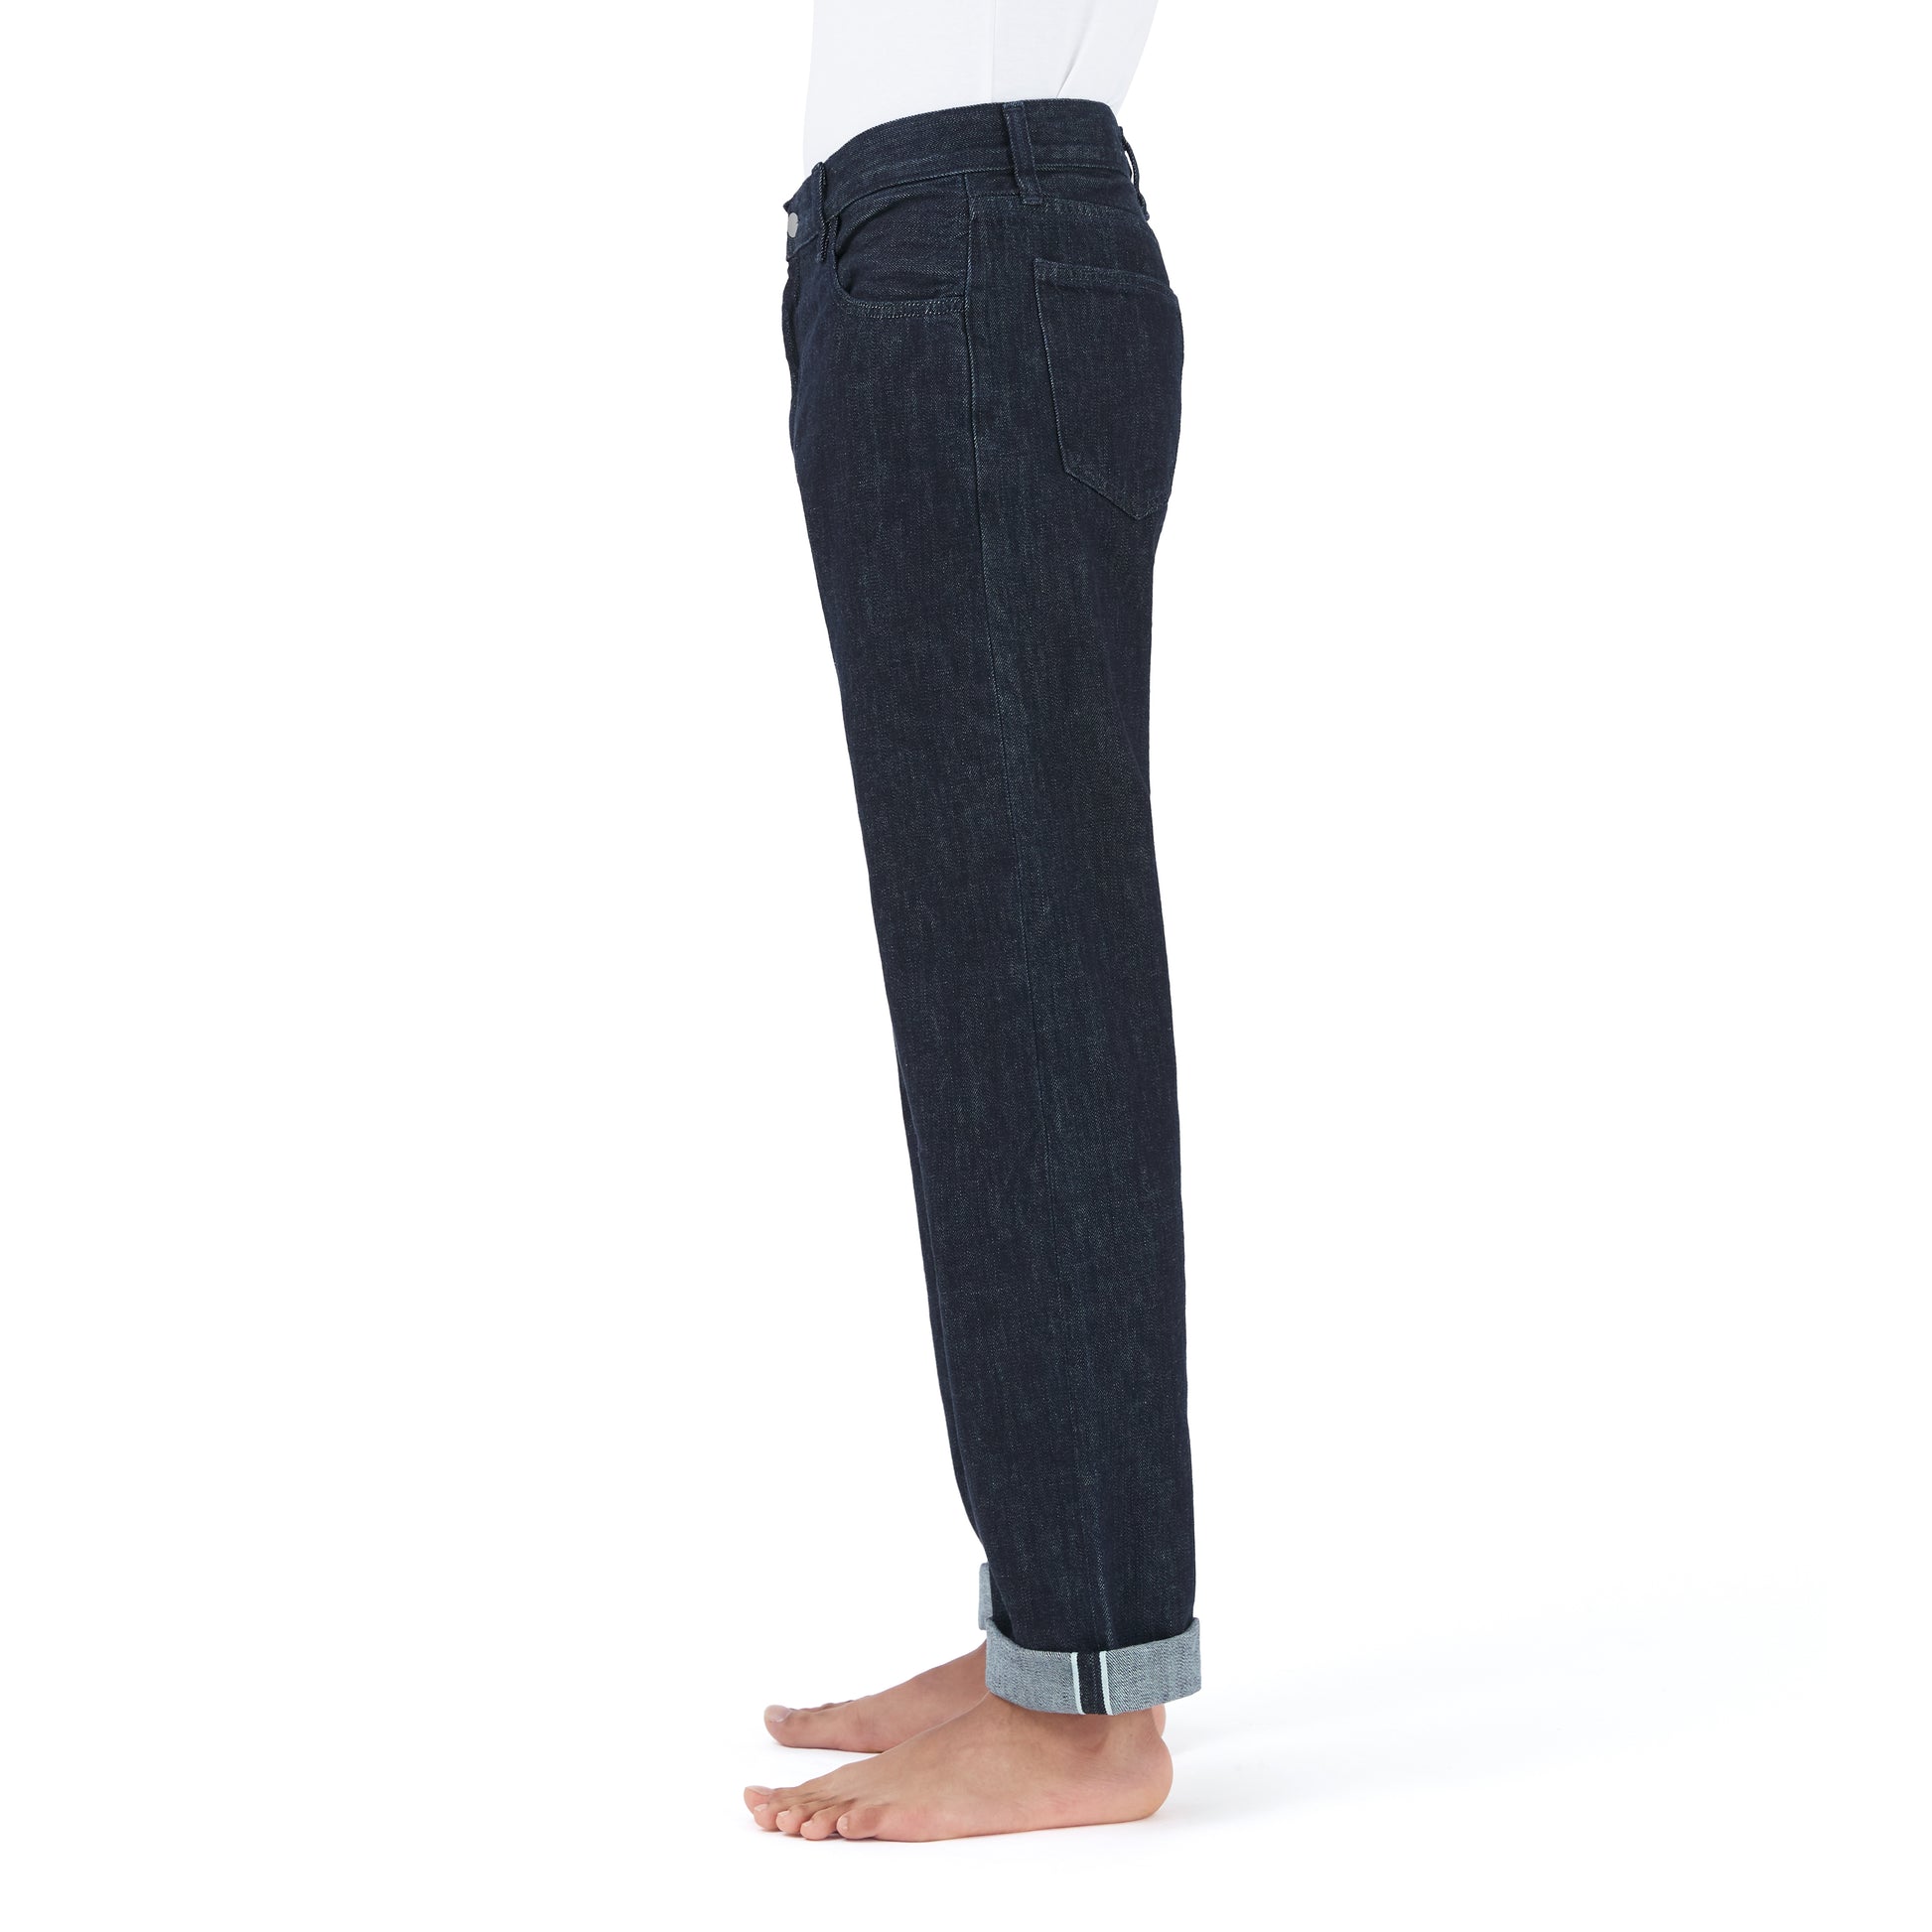 Selvedge Denim Jeans by non